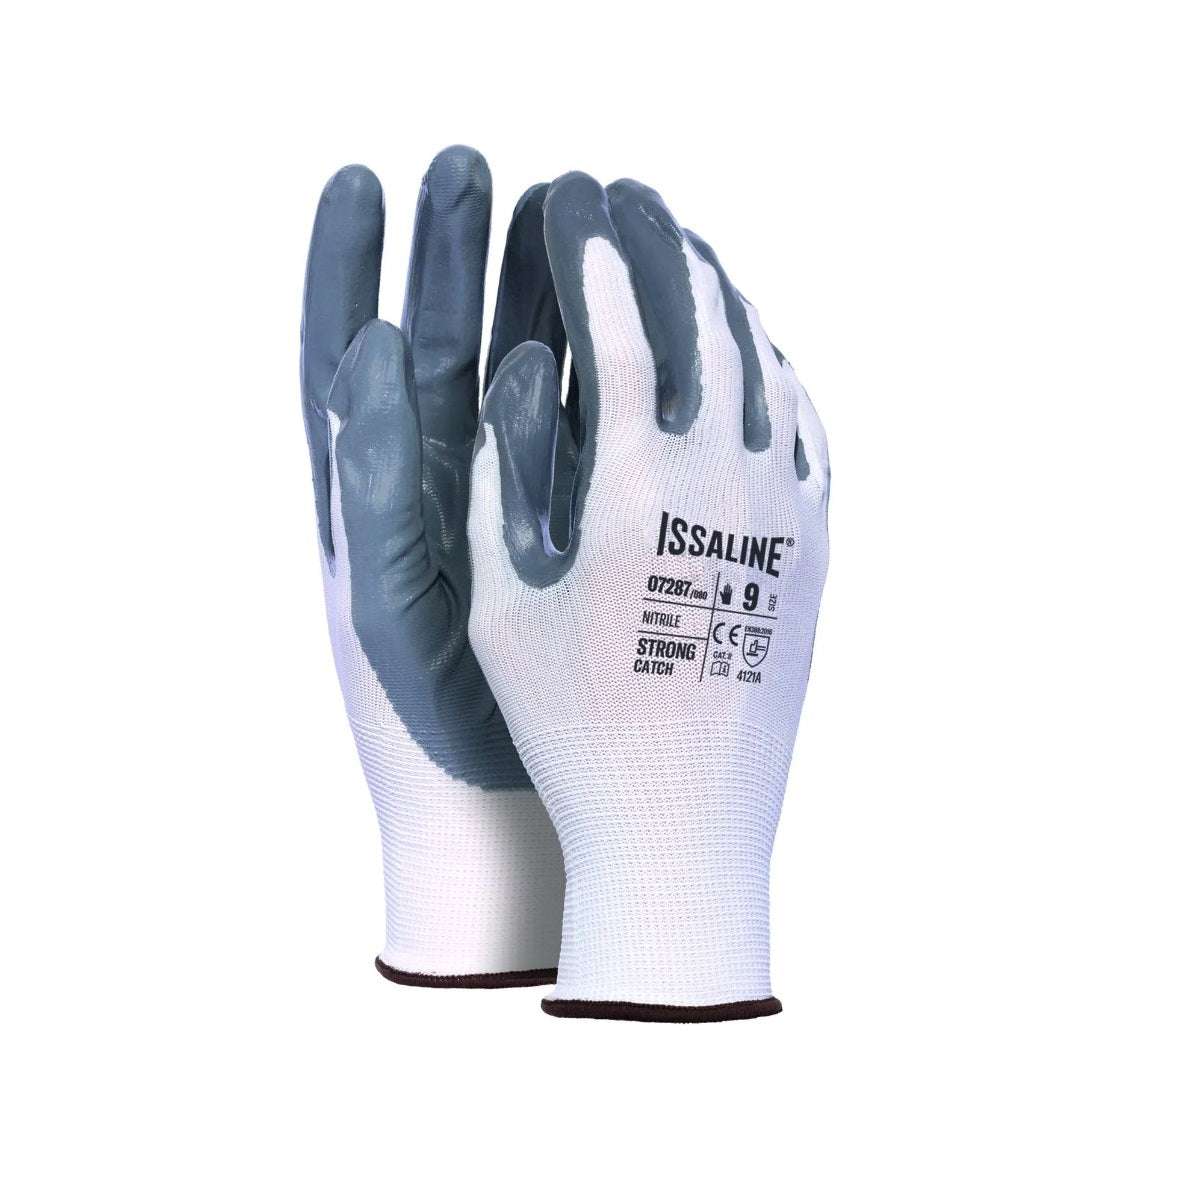 Nitrile coated polynylon glove size 8 - Industrial starter